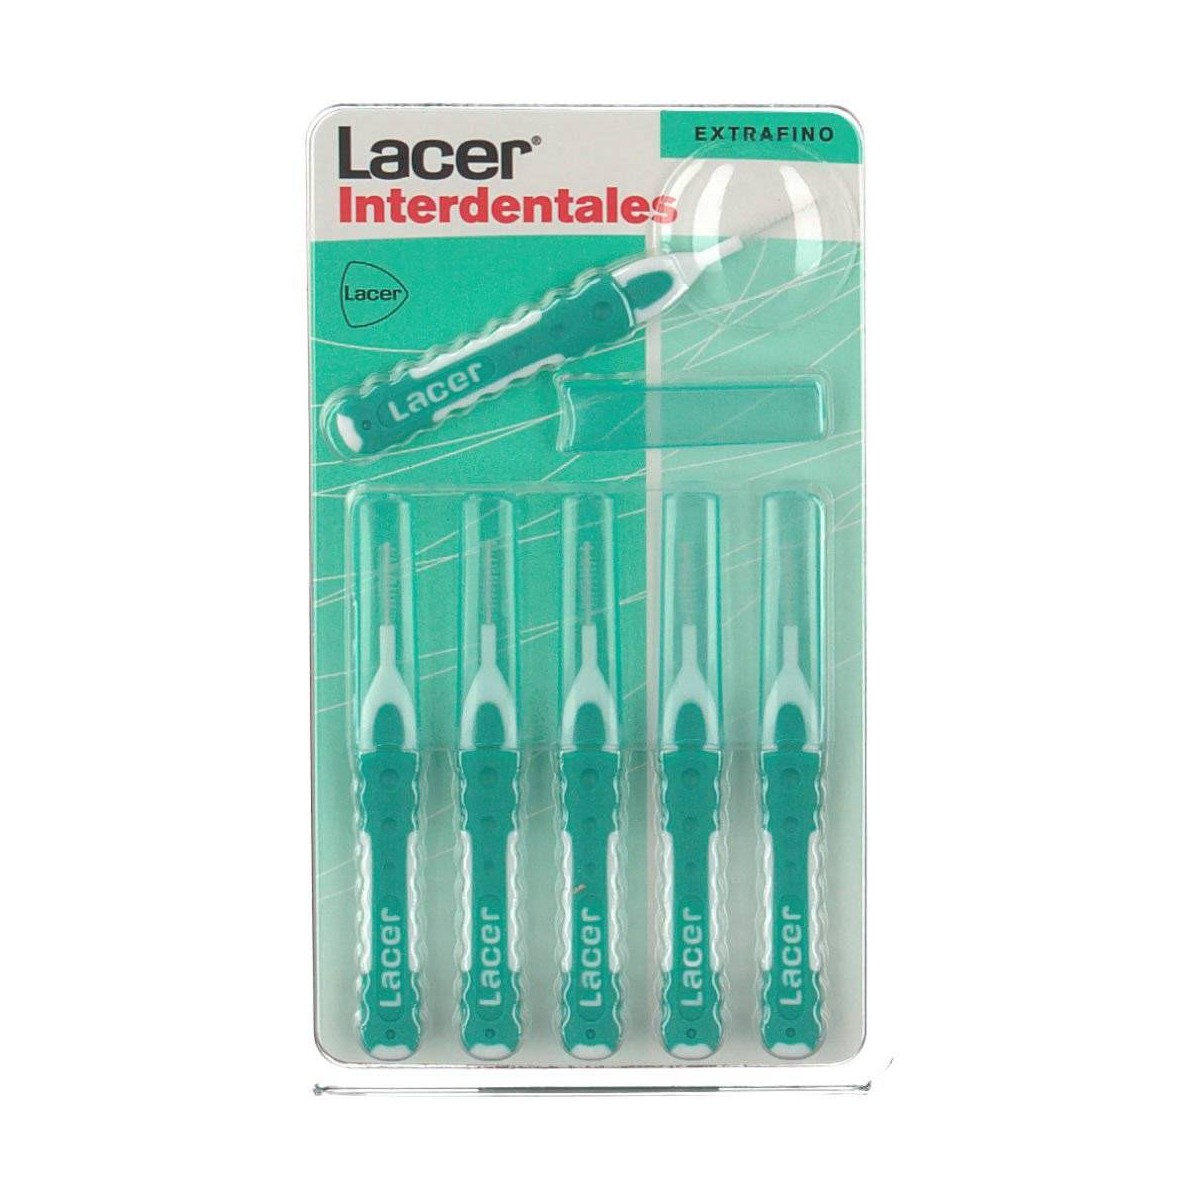 Cepillo Lacer Interdental Extrafino Angular 6U